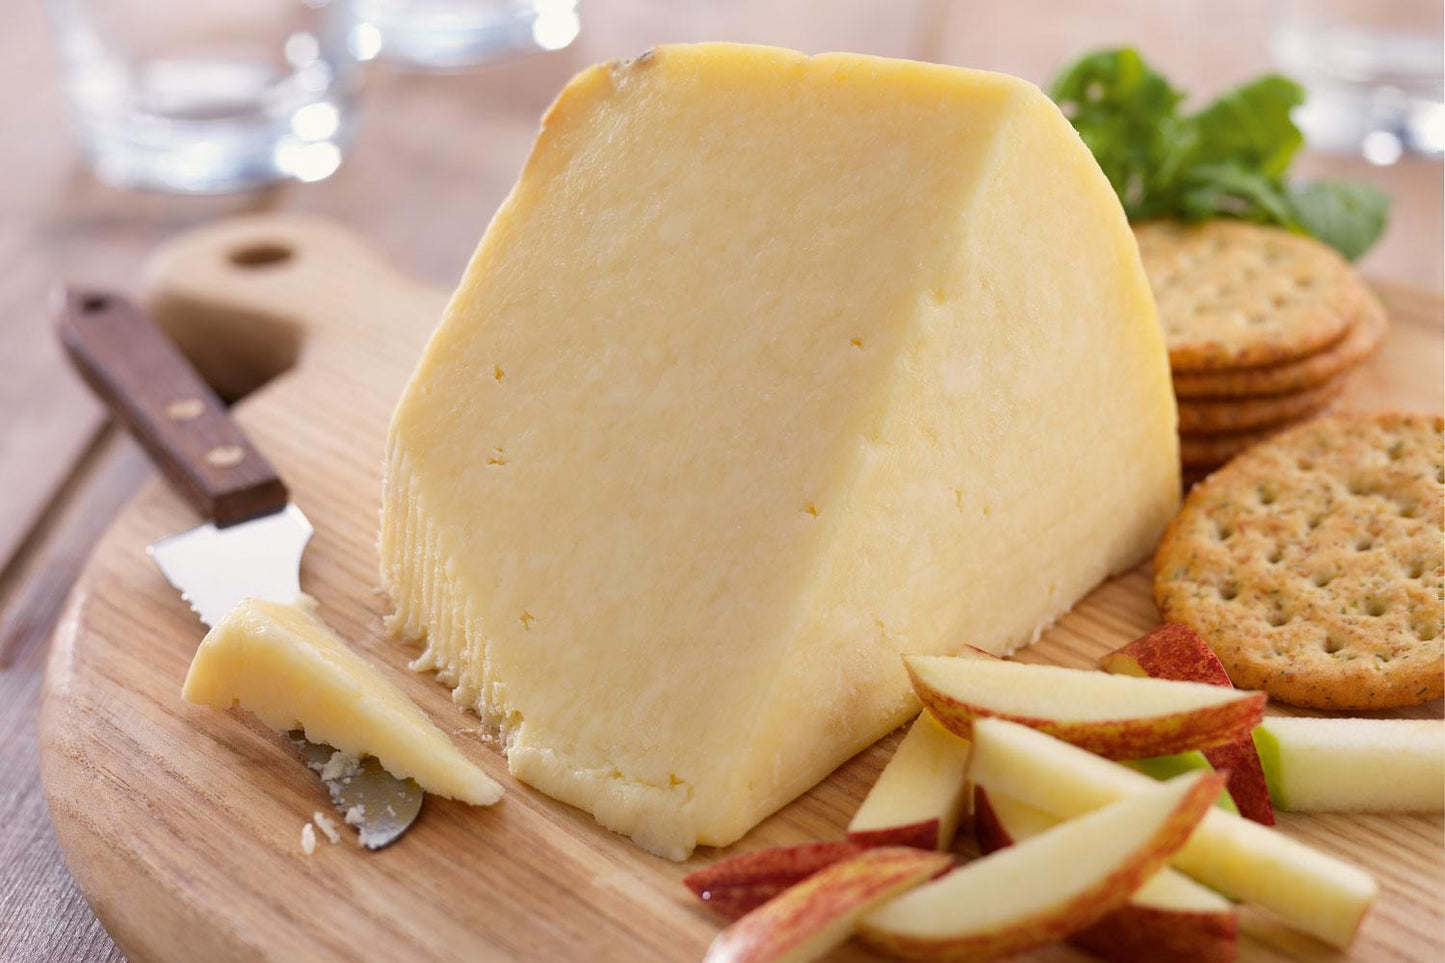 Mrs Kirkham's Lancashire Cheese